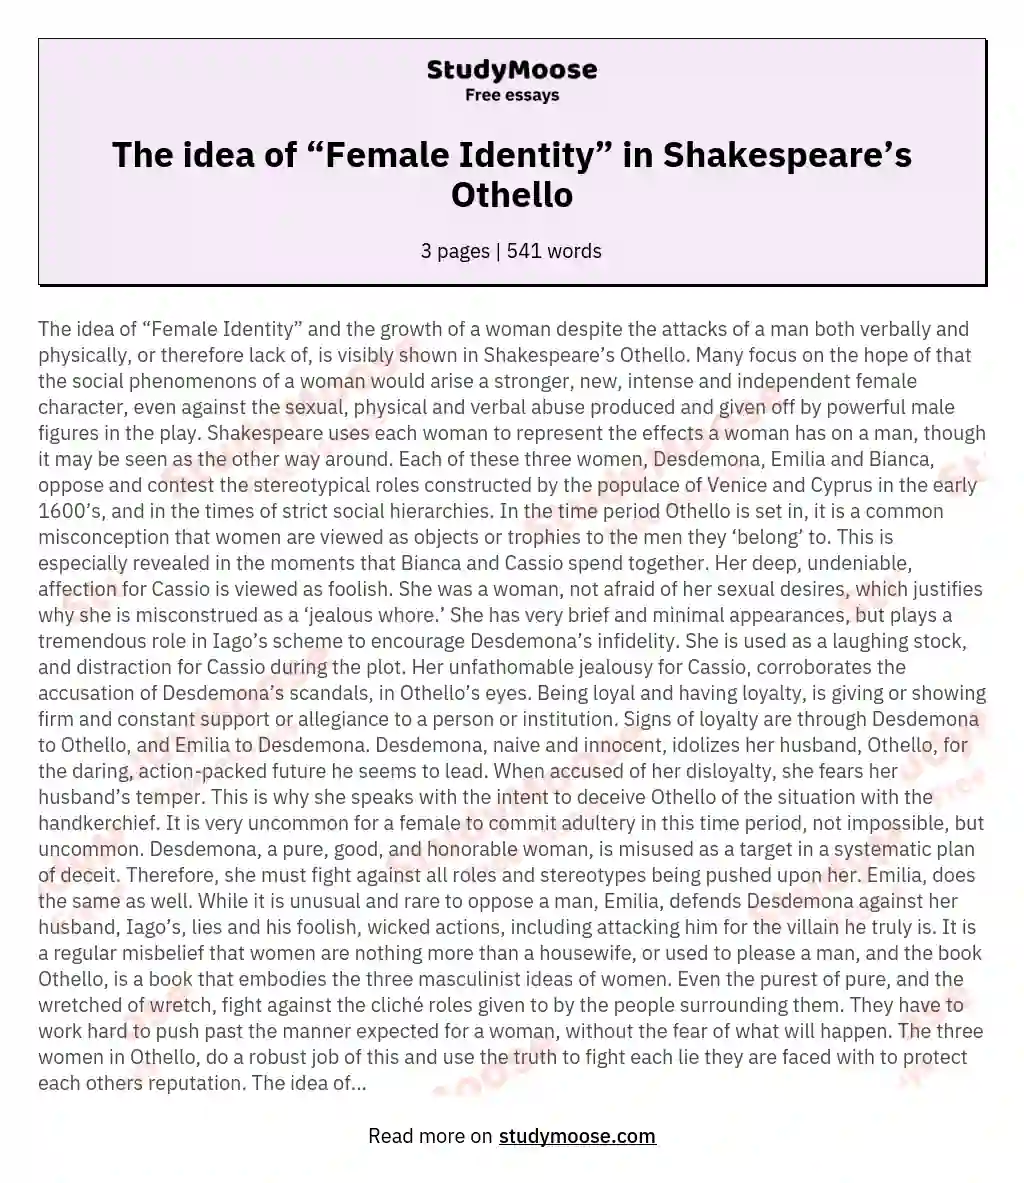 The idea of “Female Identity” in Shakespeare’s Othello essay